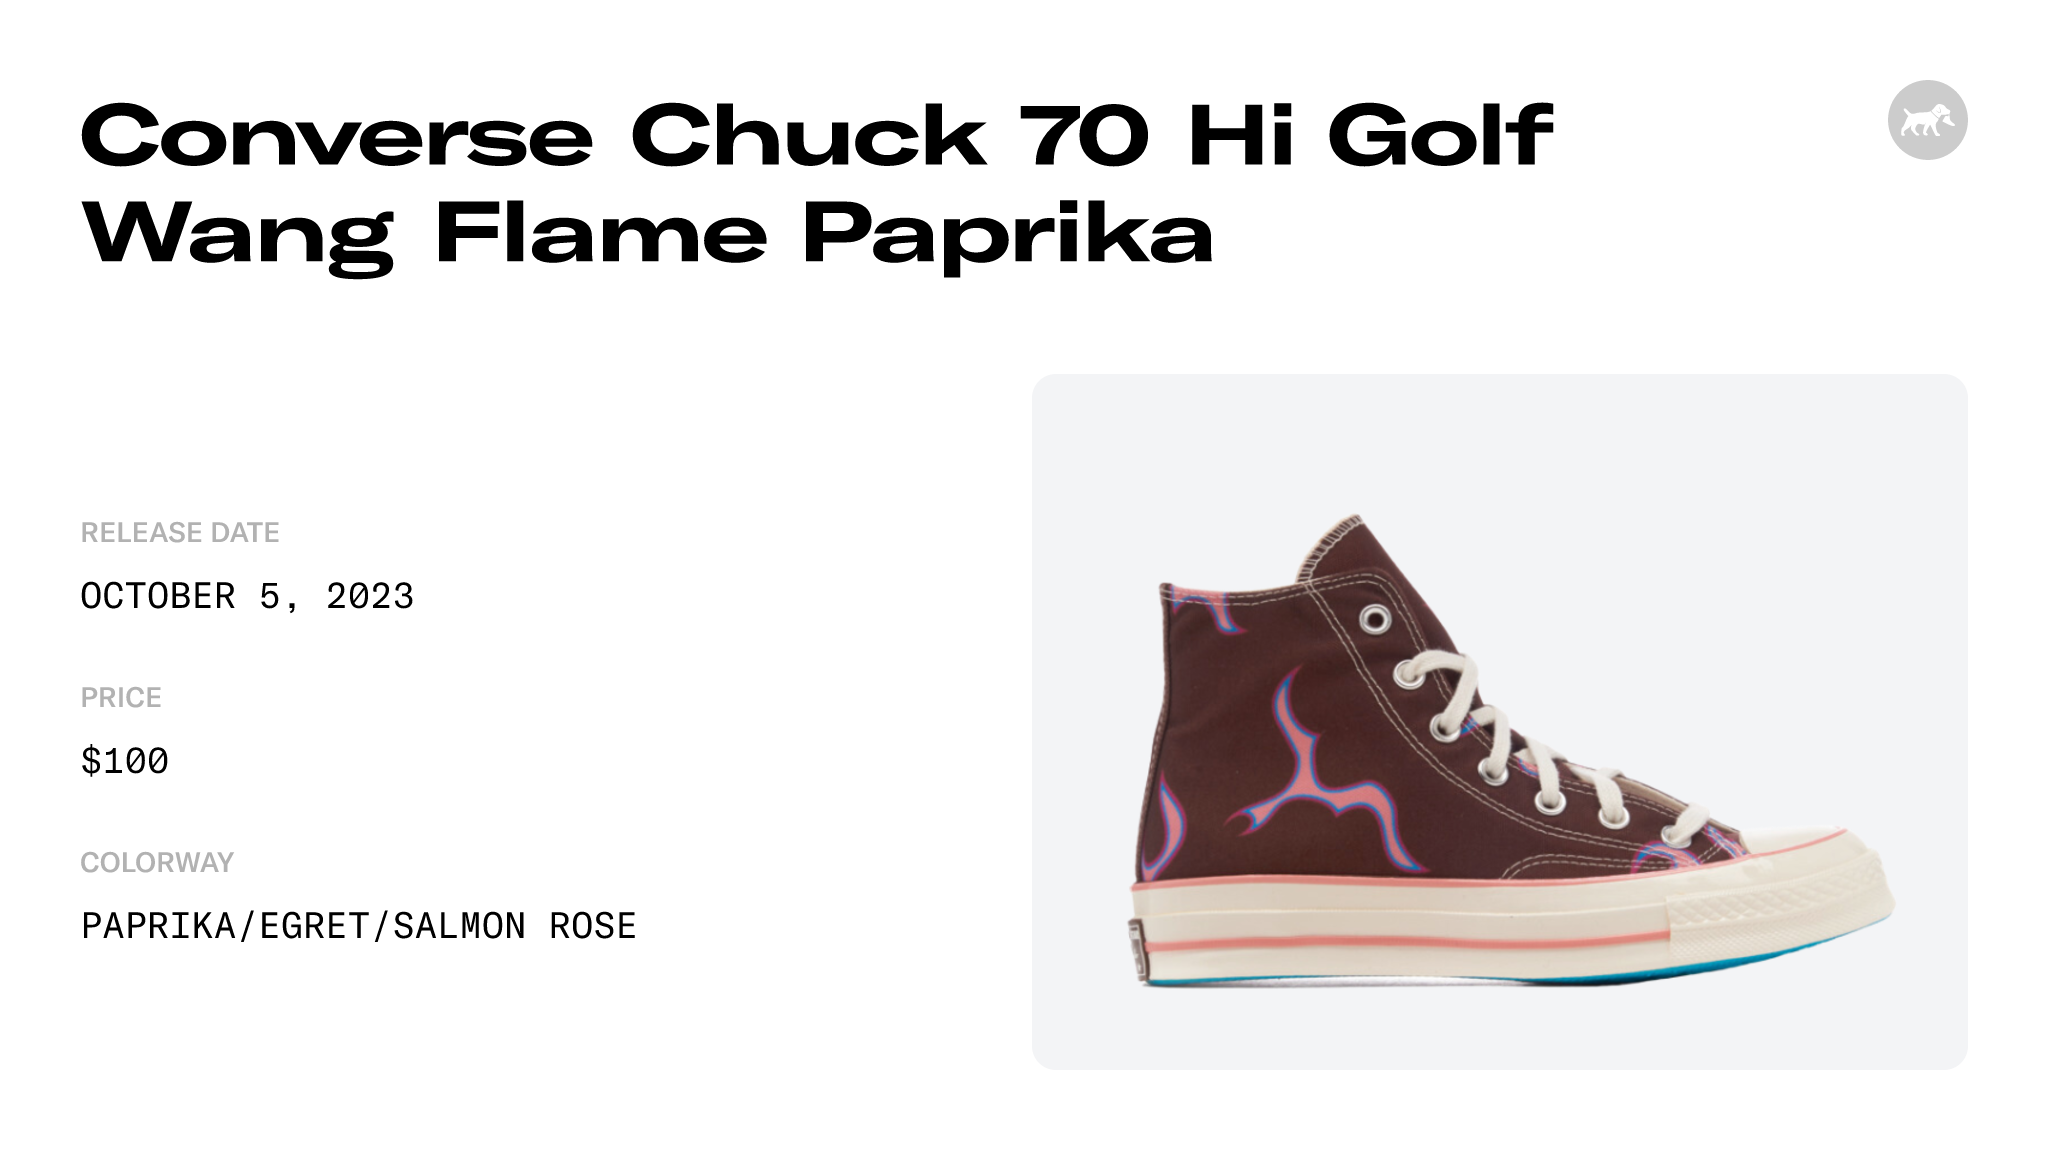 The Golf Wang x Converse Chuck 70 Hi Paprika Salmon Rose Releases